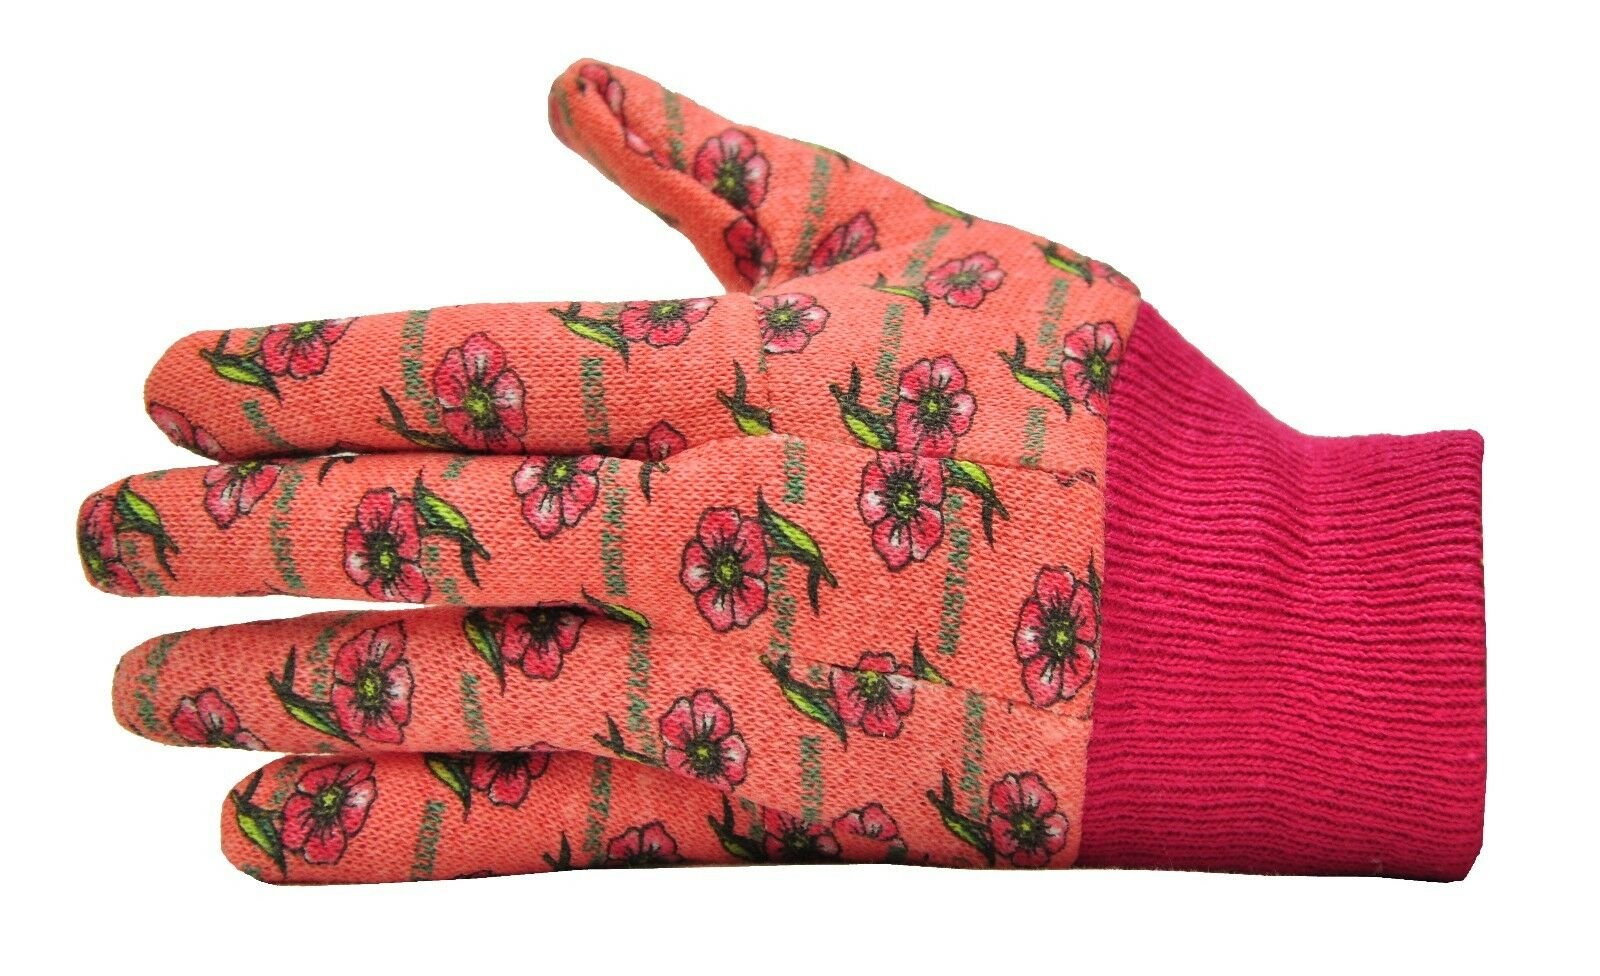 G & F Kids Garden Gloves 1823-3 JustForKids Work Gloves, 3 Pairs Green/Red/Blue per Pack - image 2 of 11